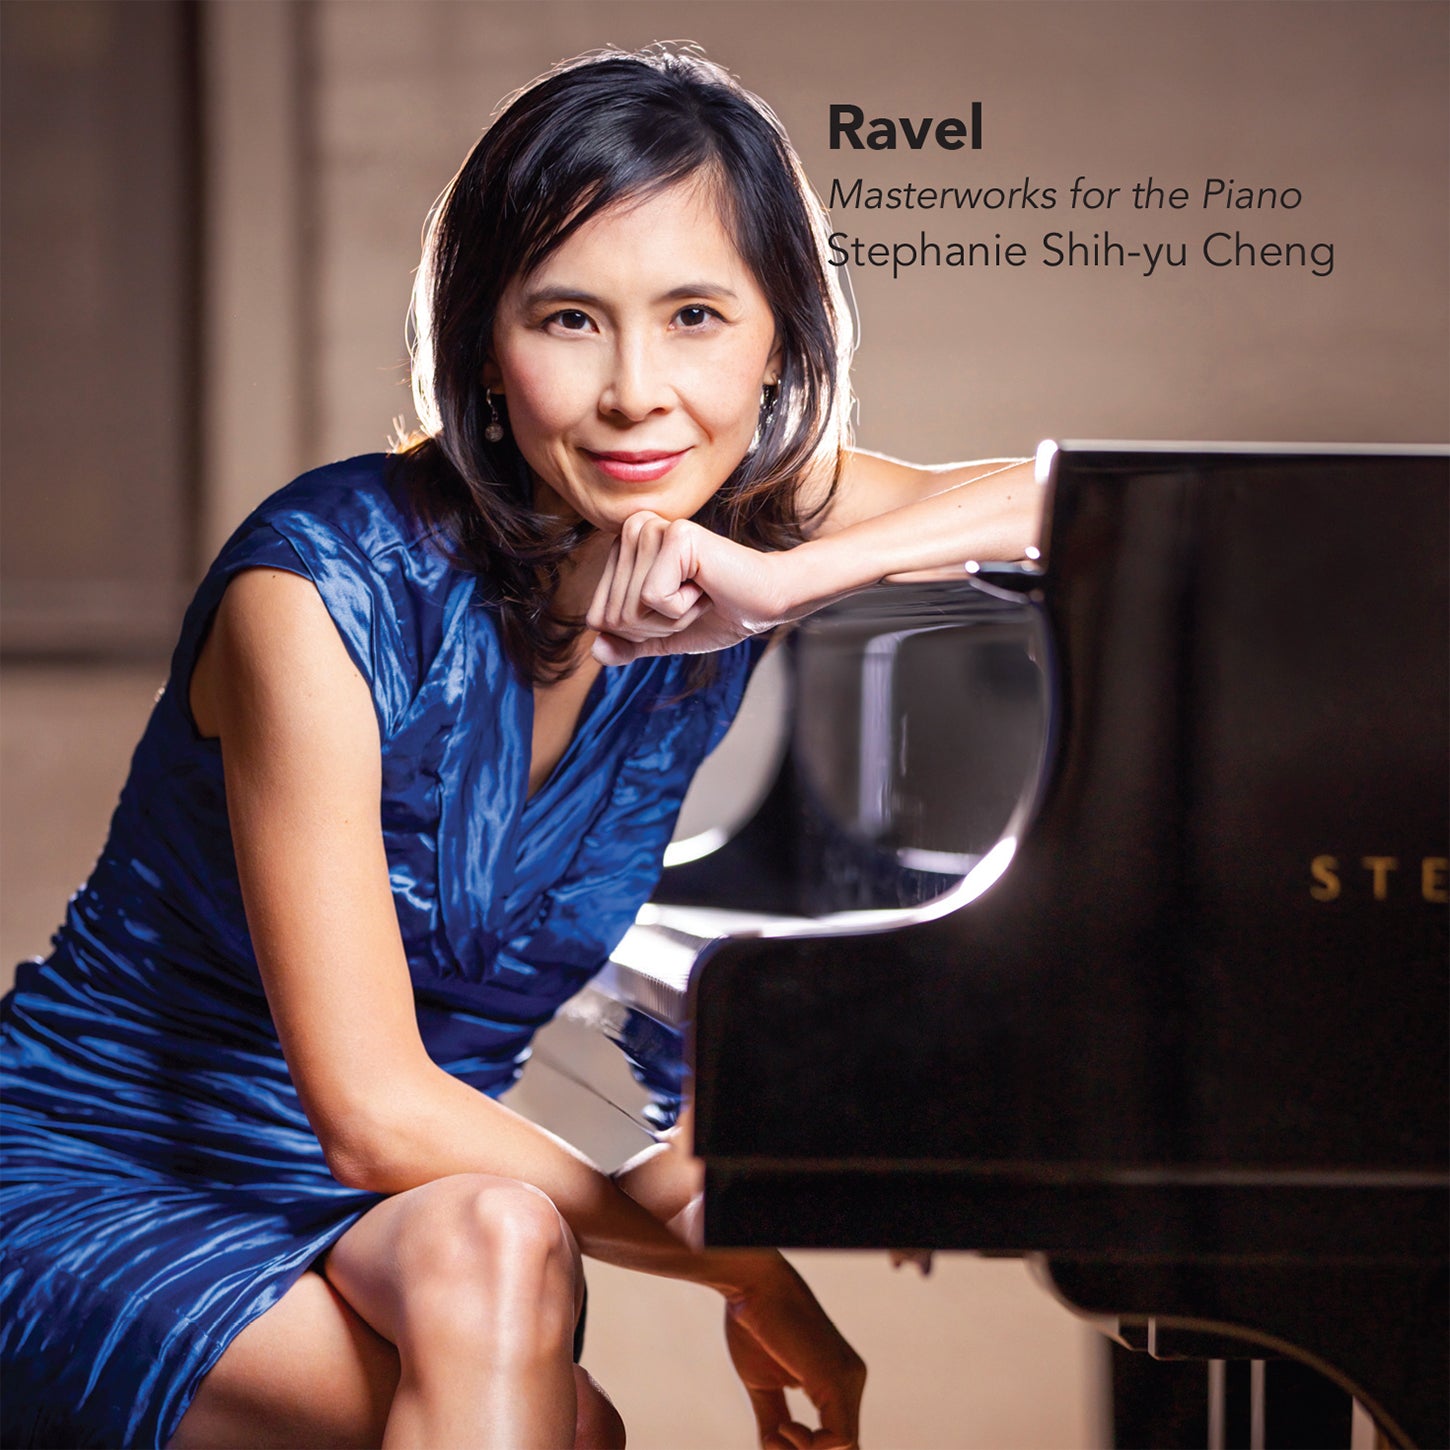 Ravel: Masterworks for the Piano / Stephanie Shih-yu Cheng